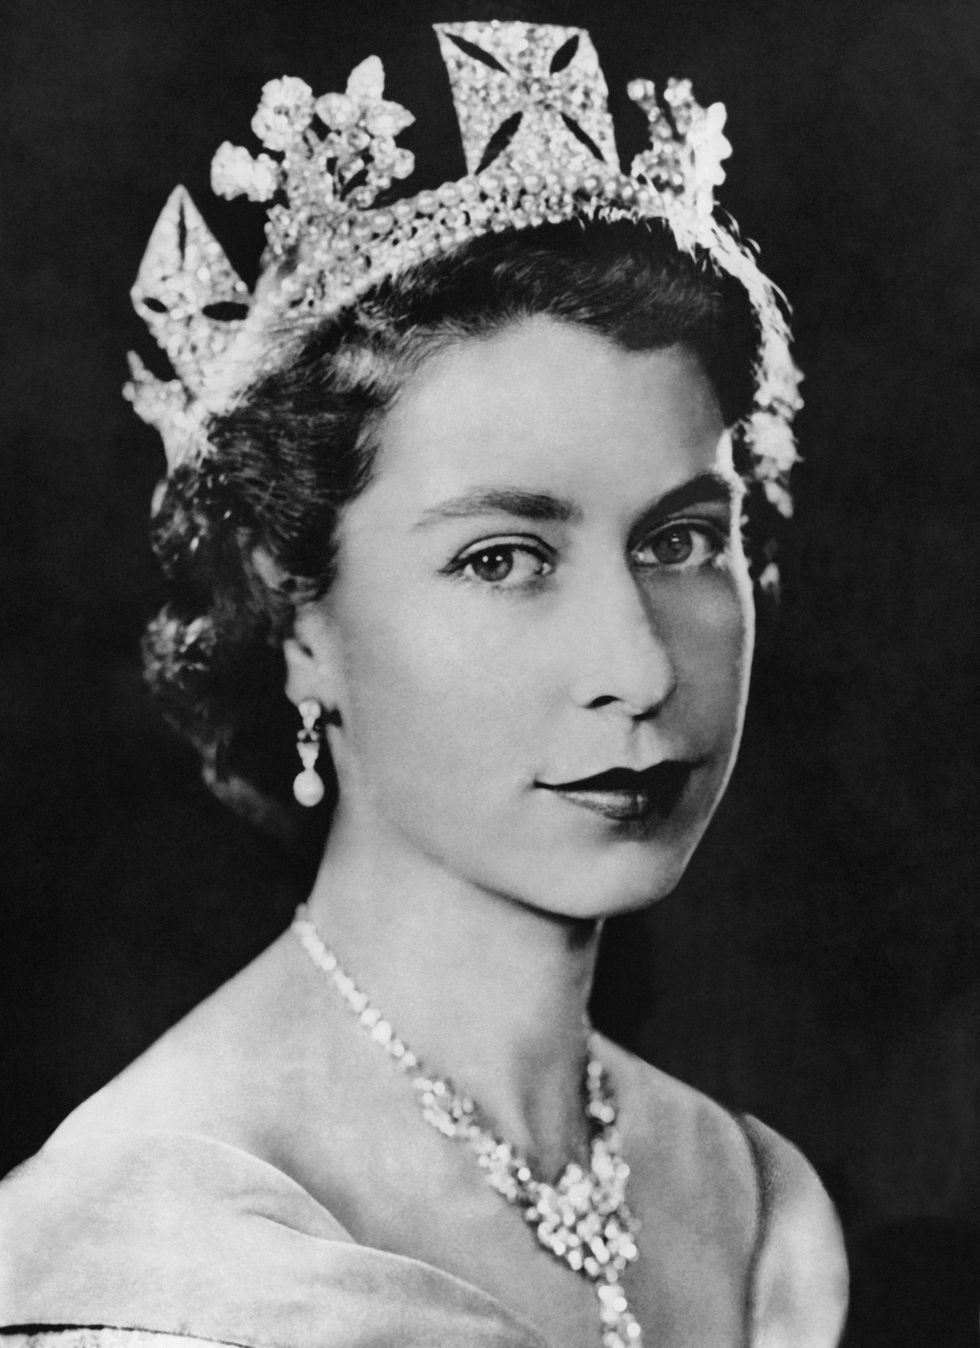 <p>Queen Elizabeth II是唇膏的大粉絲！而Clarins更成為她的首選。事實上，她甚至在1952年的加冕大典上，要求訂製與其加冕長袍相同顏色的口紅，此款紅帶藍色調的唇膏被稱為「巴爾莫勒爾」<span class="redactor-invisible-space">（The Balmoral Lipstick），名字</span>源自伊莉莎白二世的家鄉—蘇格蘭。她對於顏色的熱愛從那之後就沒再停過，在許多的公開場合，都能夠看見伊莉莎白二世穿戴不同的美麗唇色。</p>